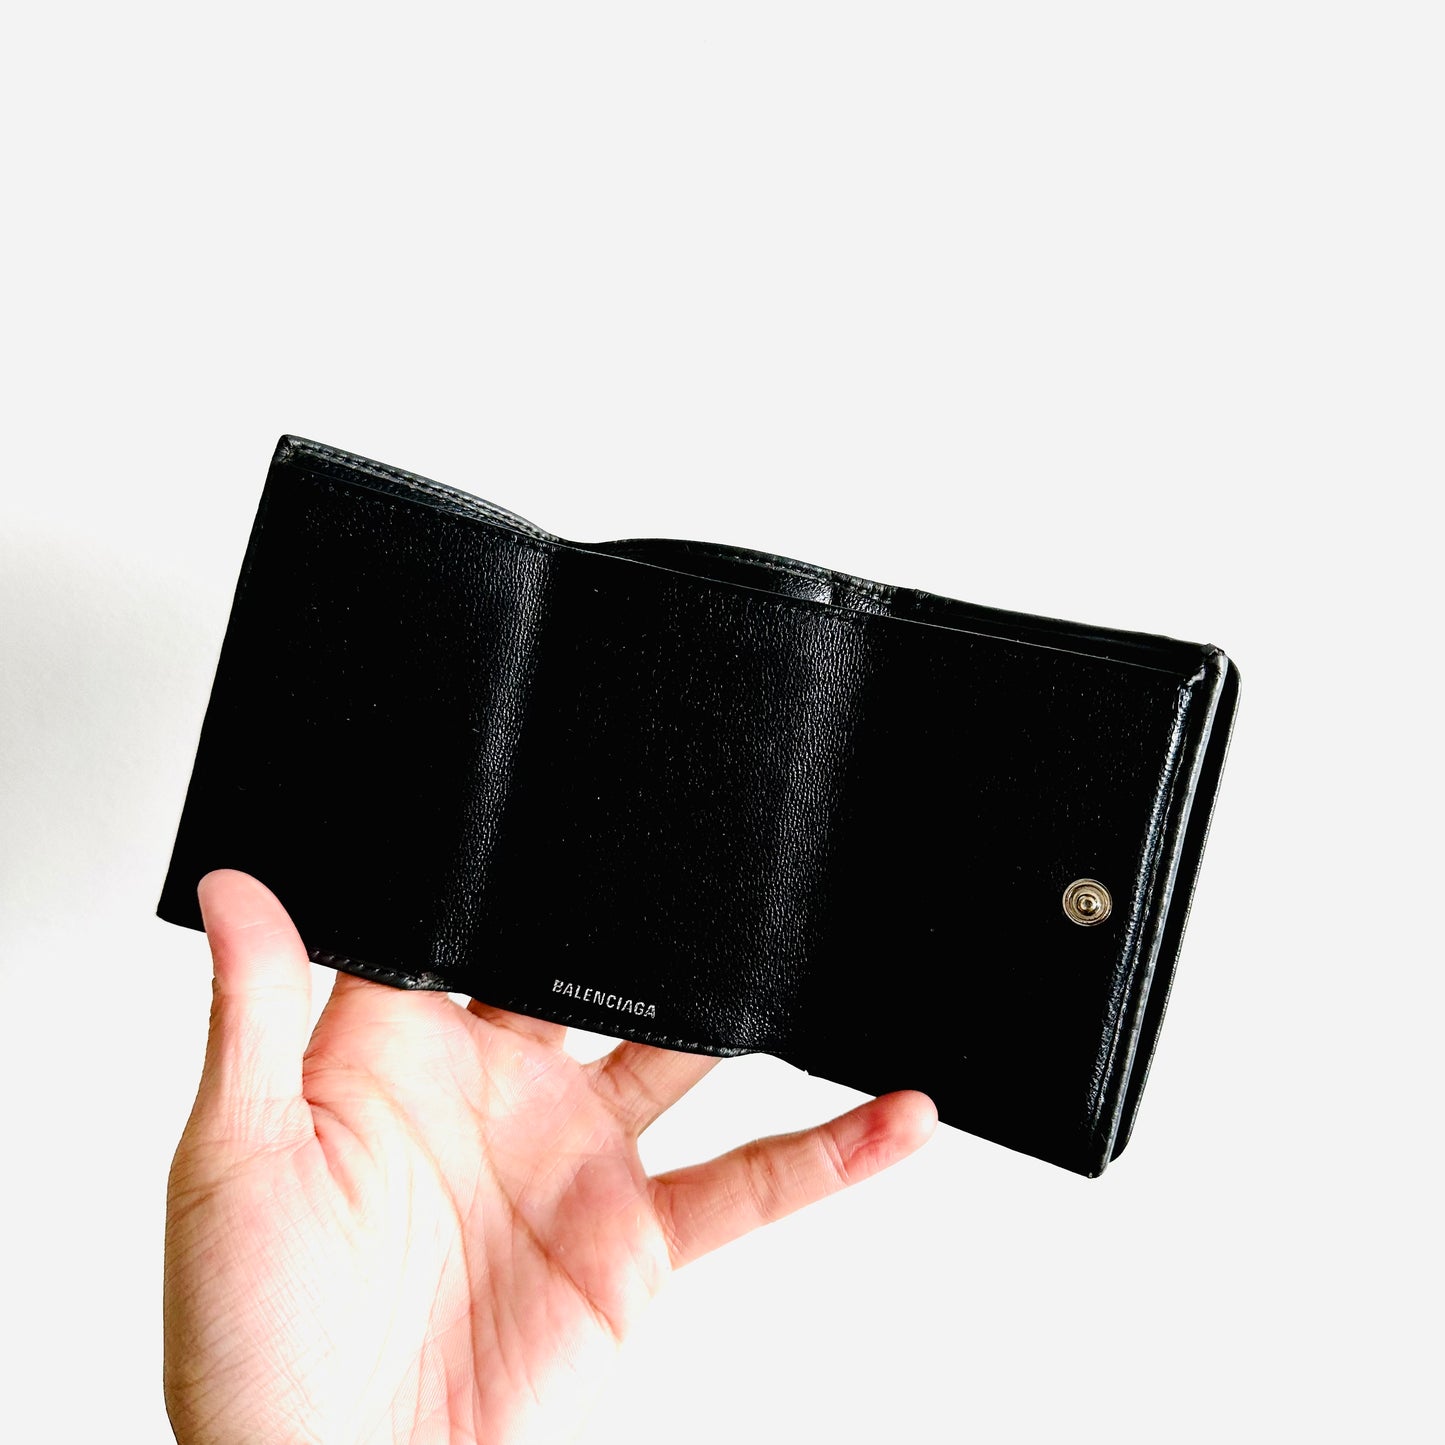 Balenciaga Black Leather Classic Motif Monogram Logo Flap Trifold Compact Wallet